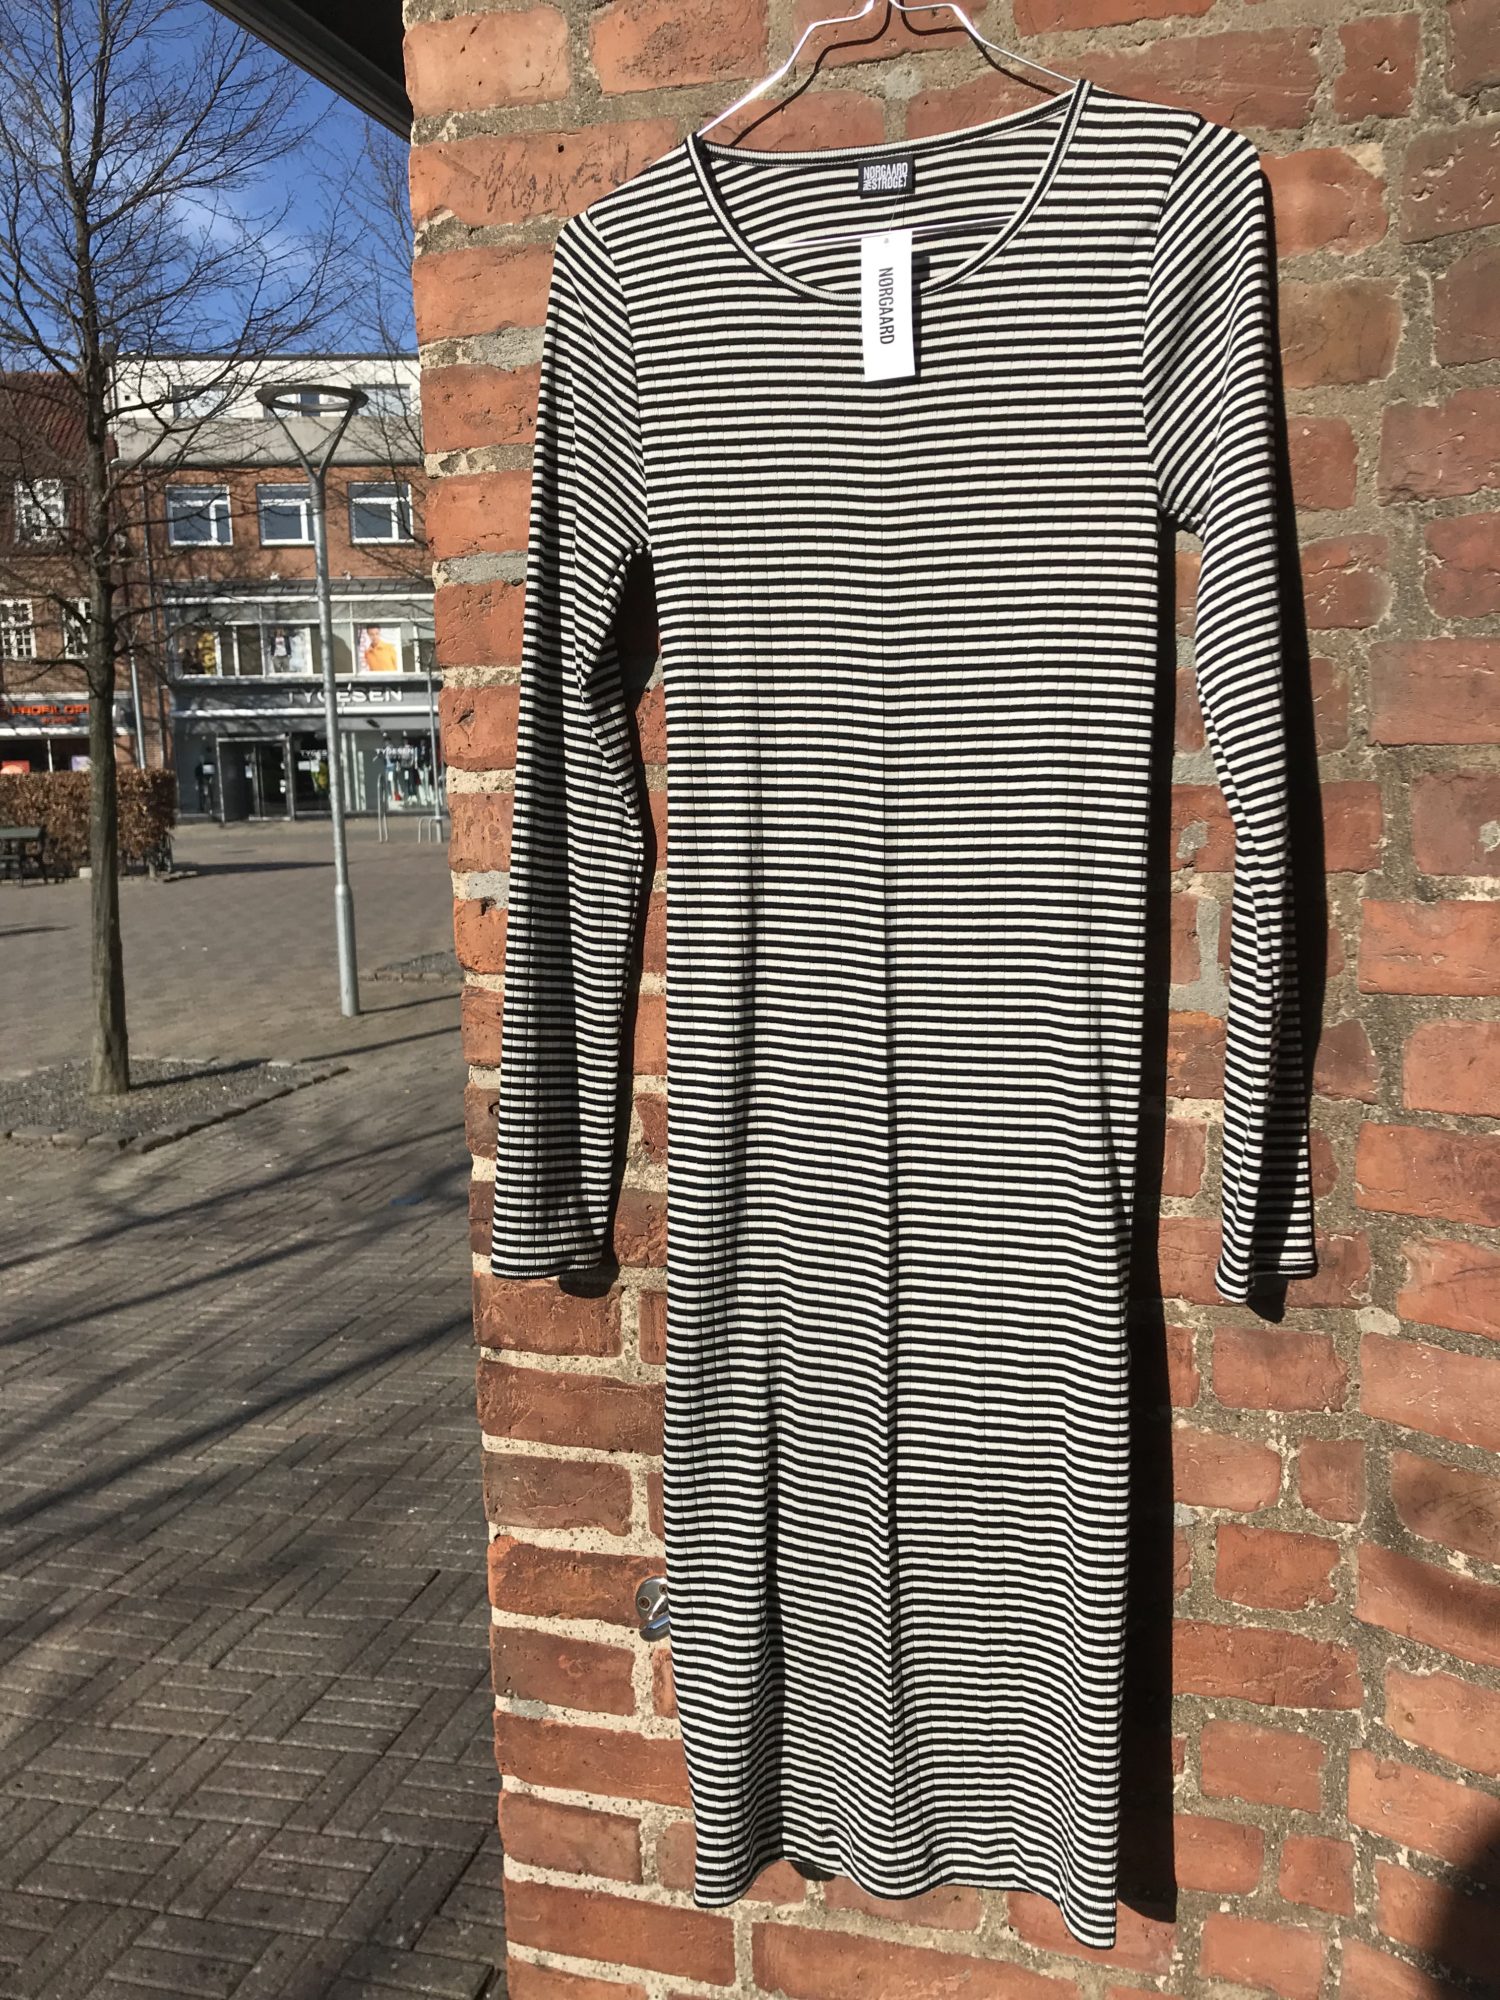 kjole smal stribet sort og hvid JOHN DRESS til kvinder hos Augustashop.dk